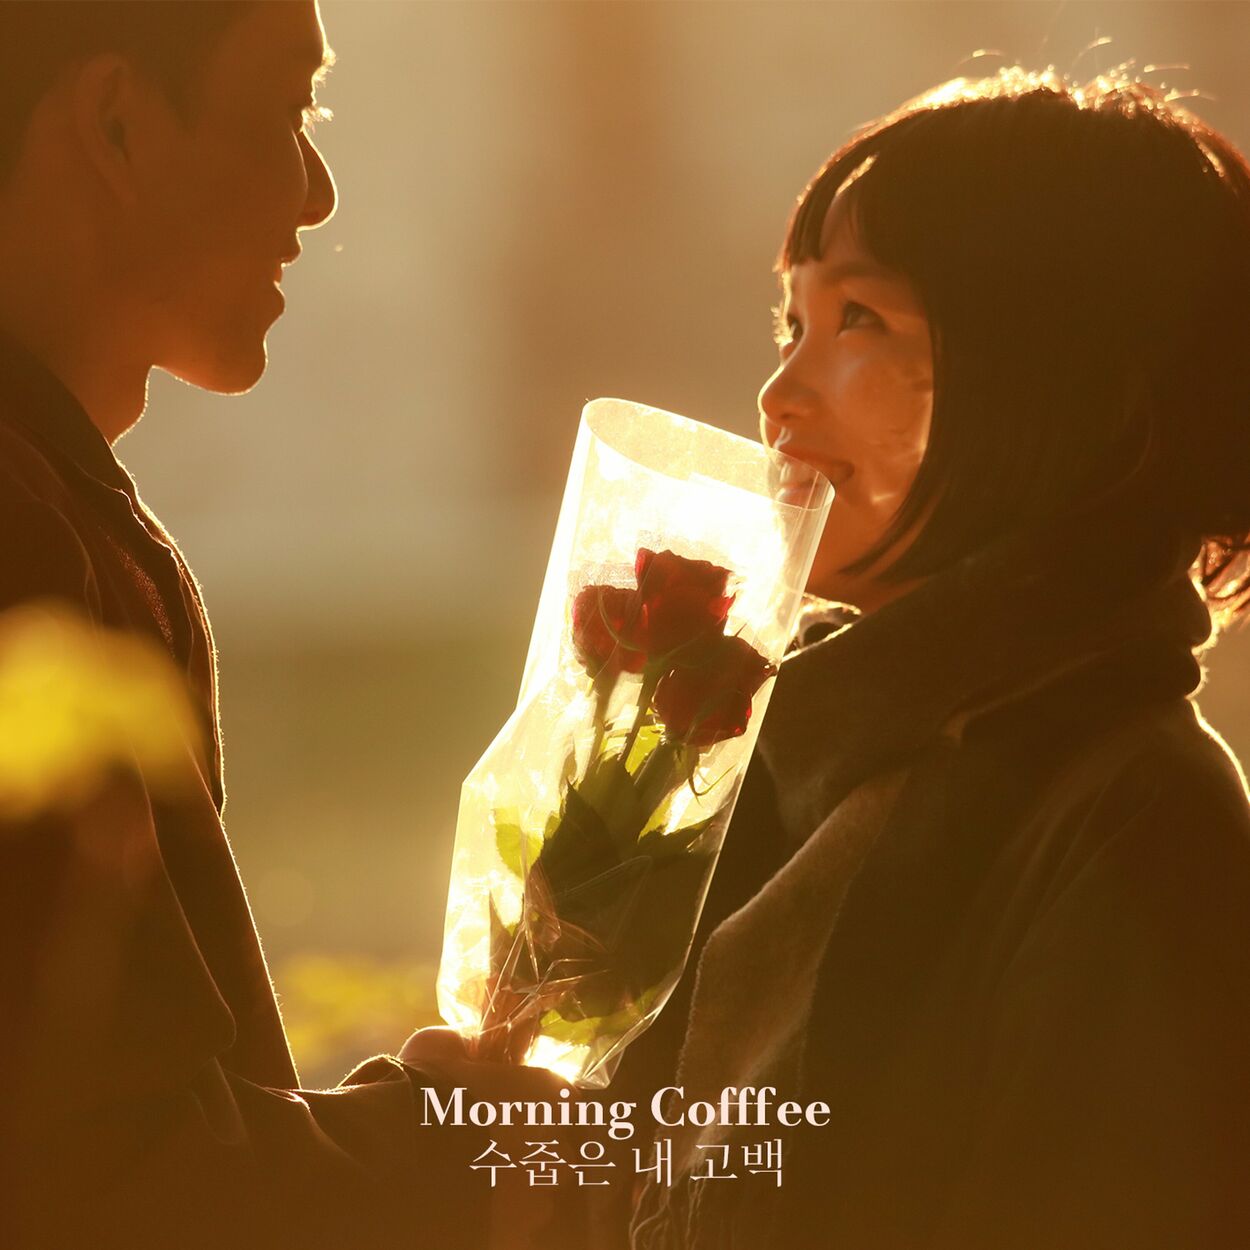 Morning Coffee – My shy confession – Single